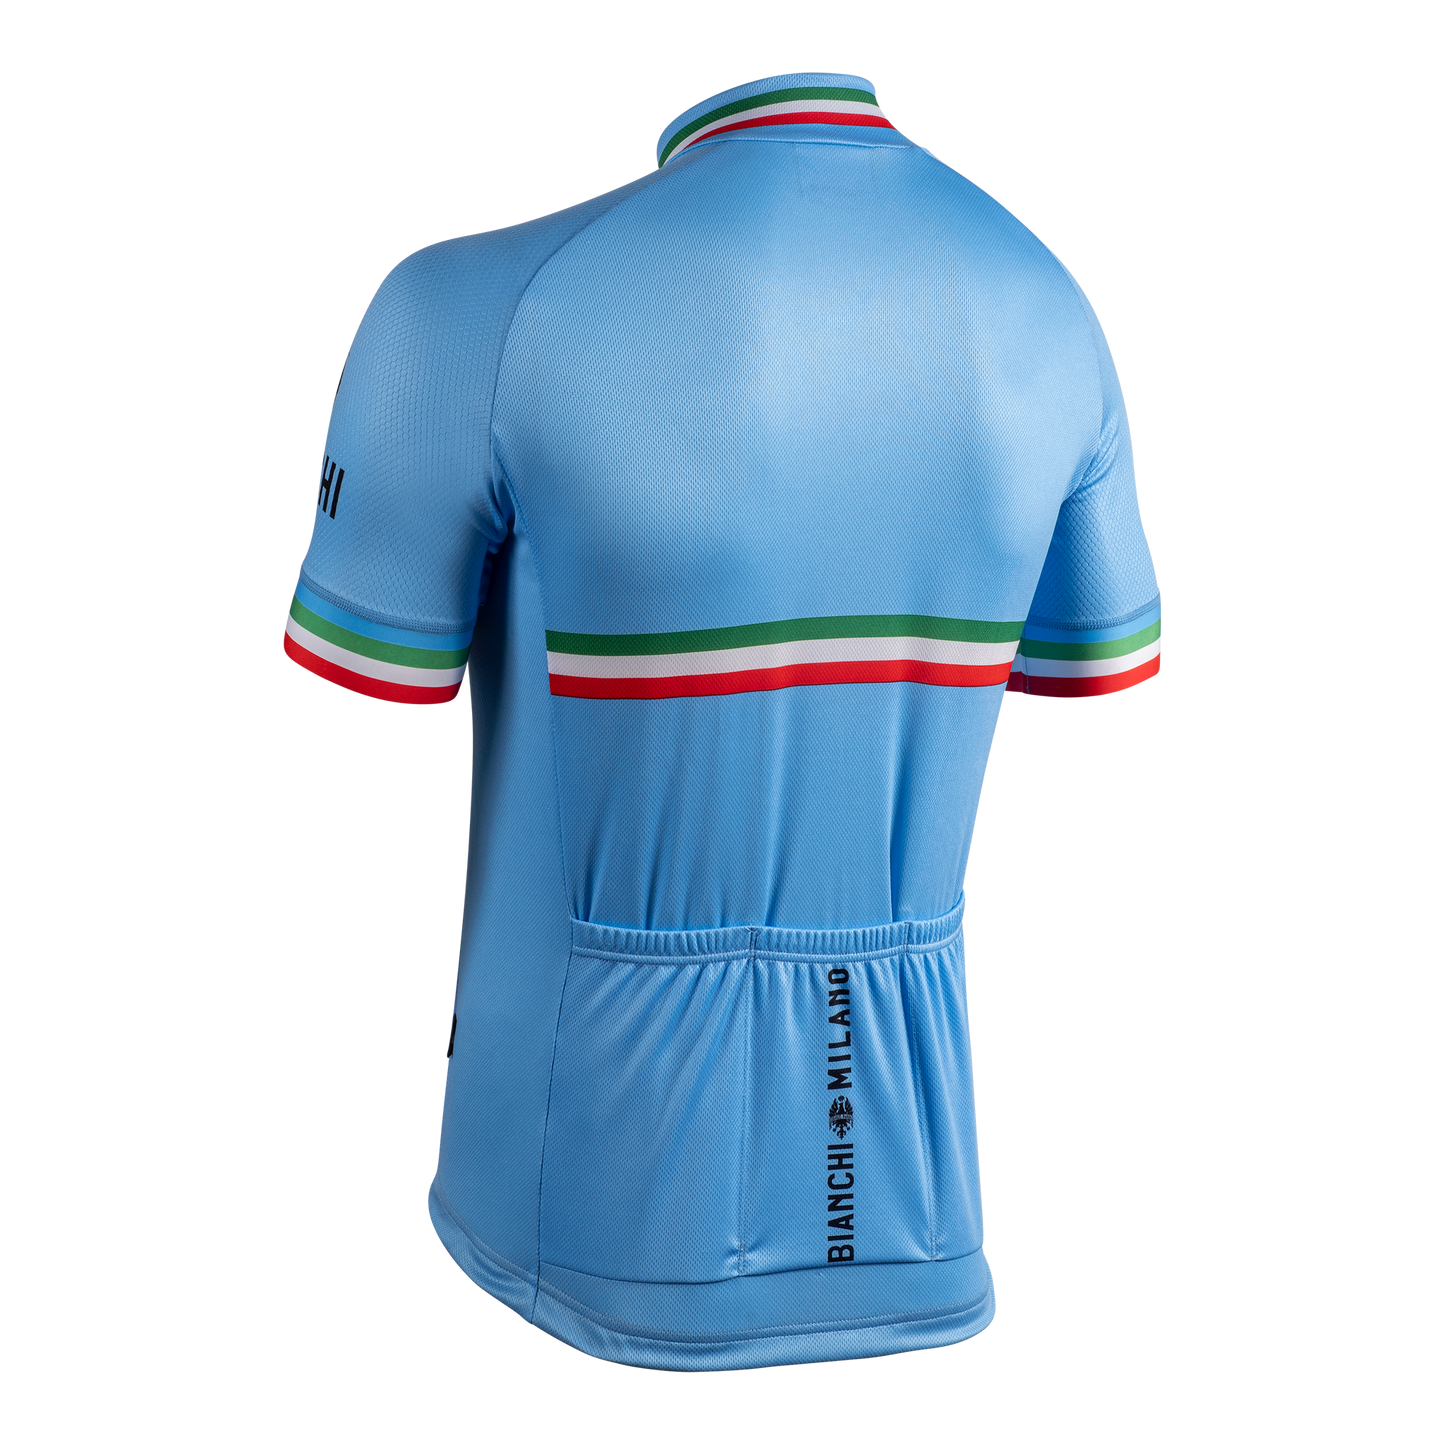 Bianchi Isalle Men's Cycling Jersey (Blue) S, 3XL, 4XL